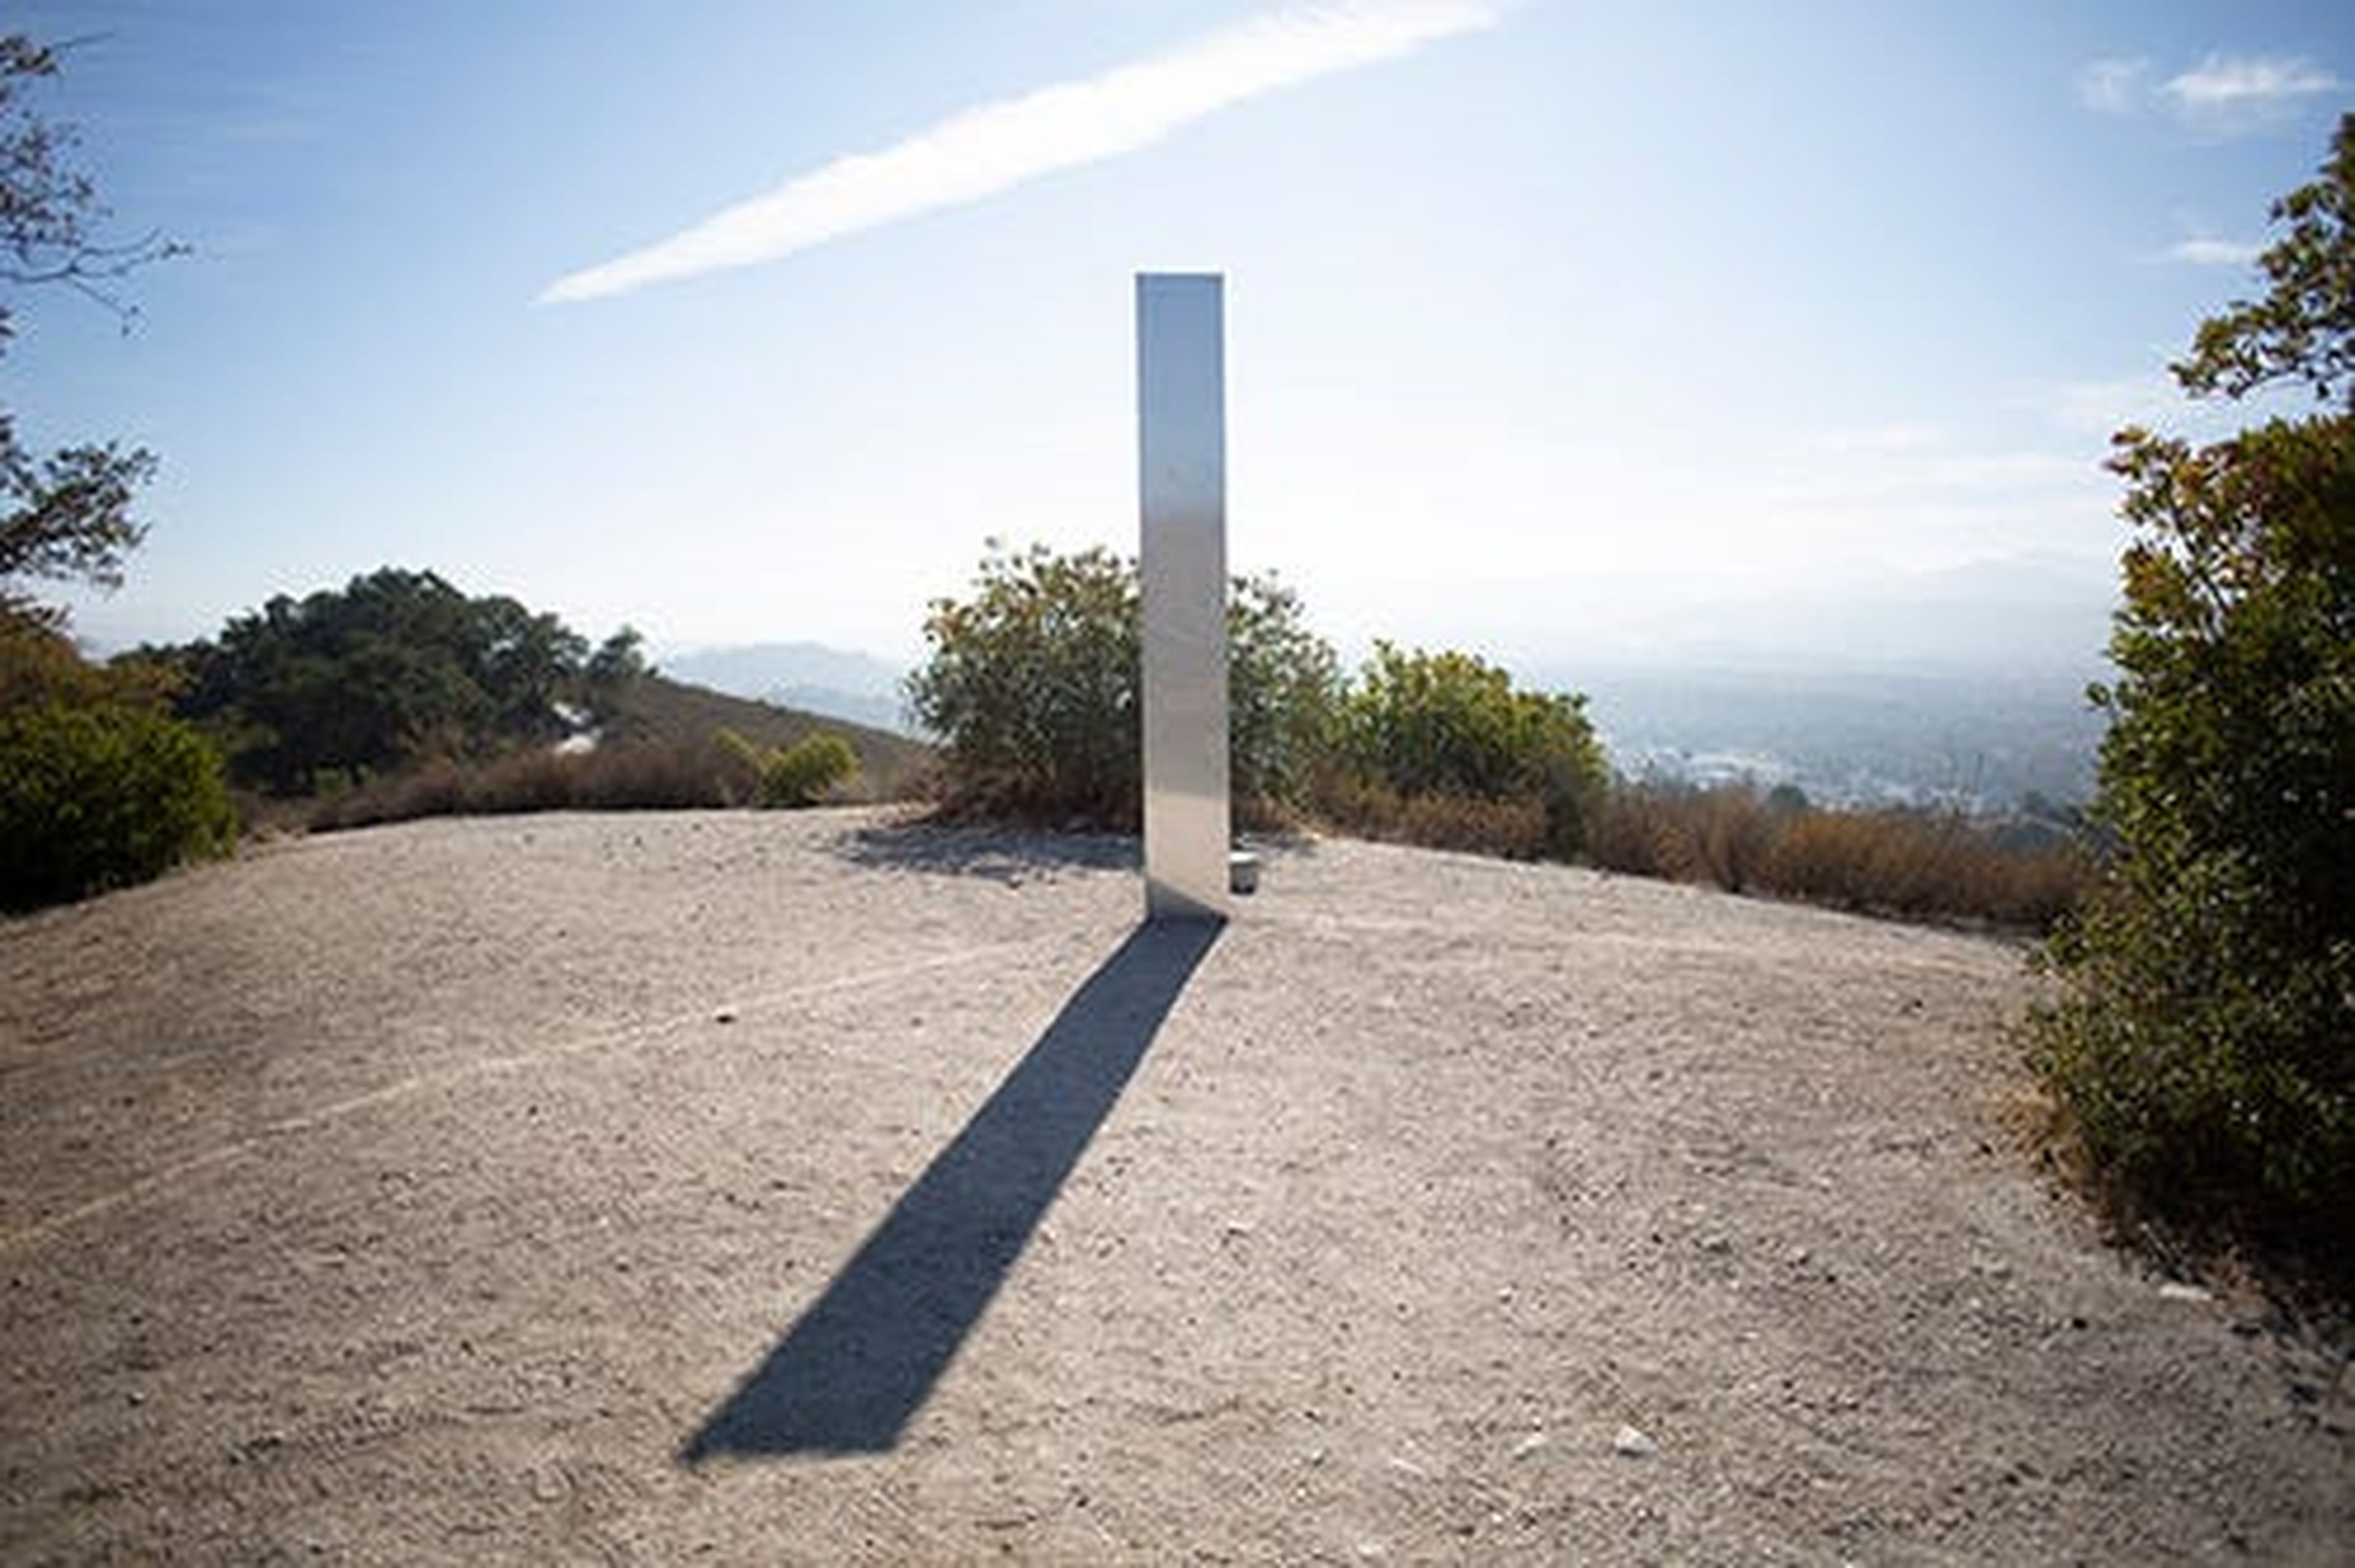 A metal monolith found atop Pine Mountain in California, December 2, 2020